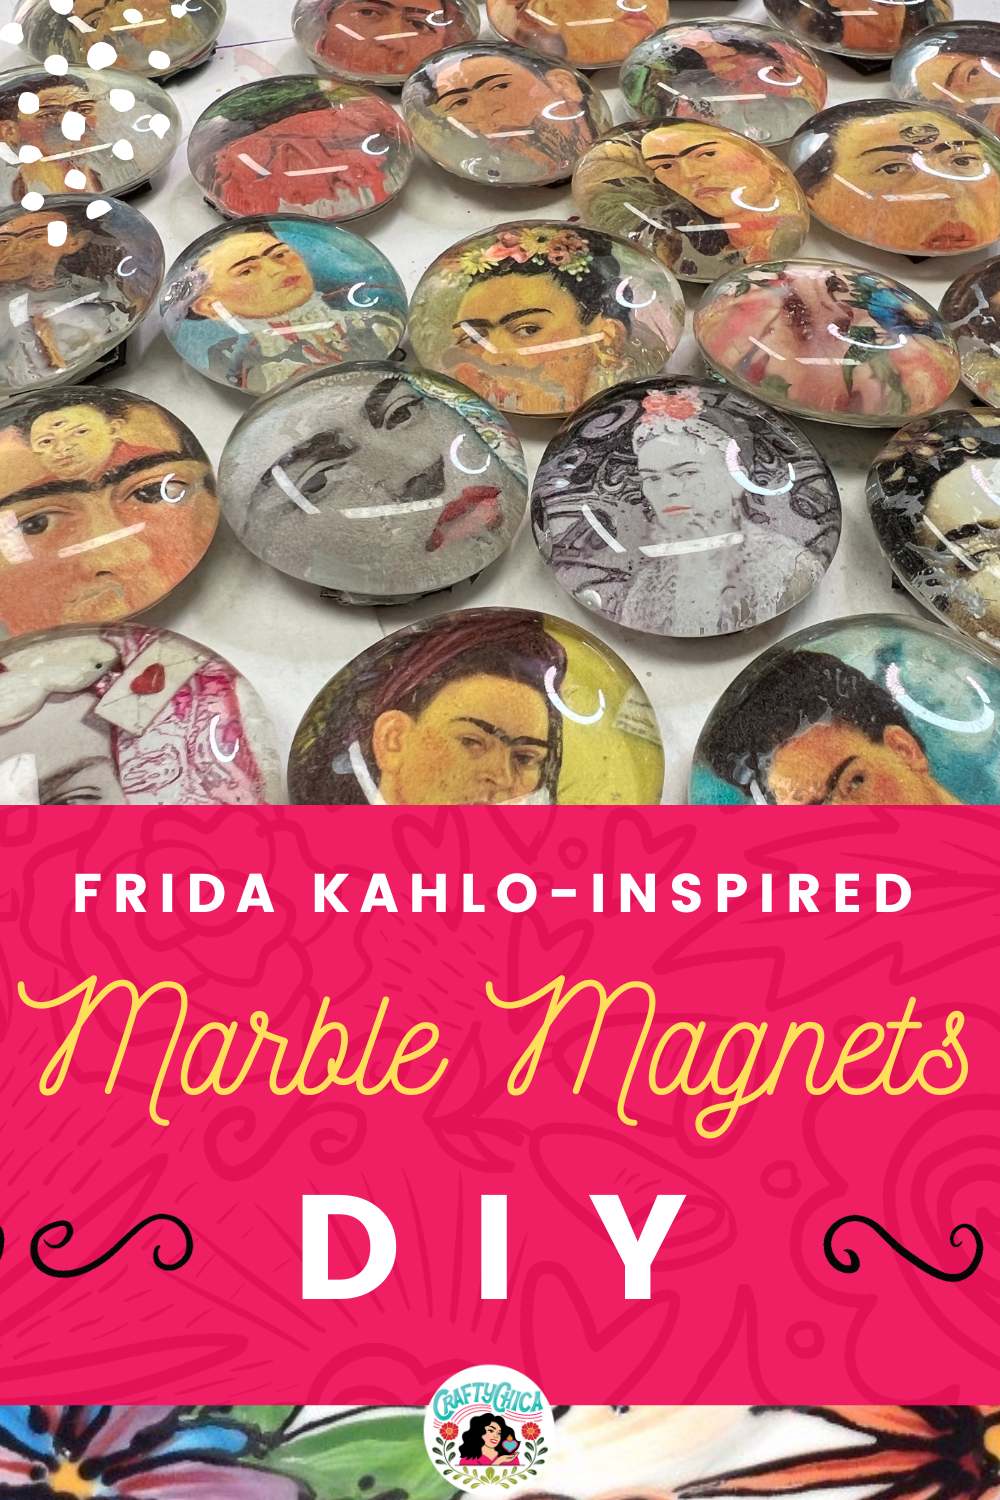 Frida Kahlo-inspired craft